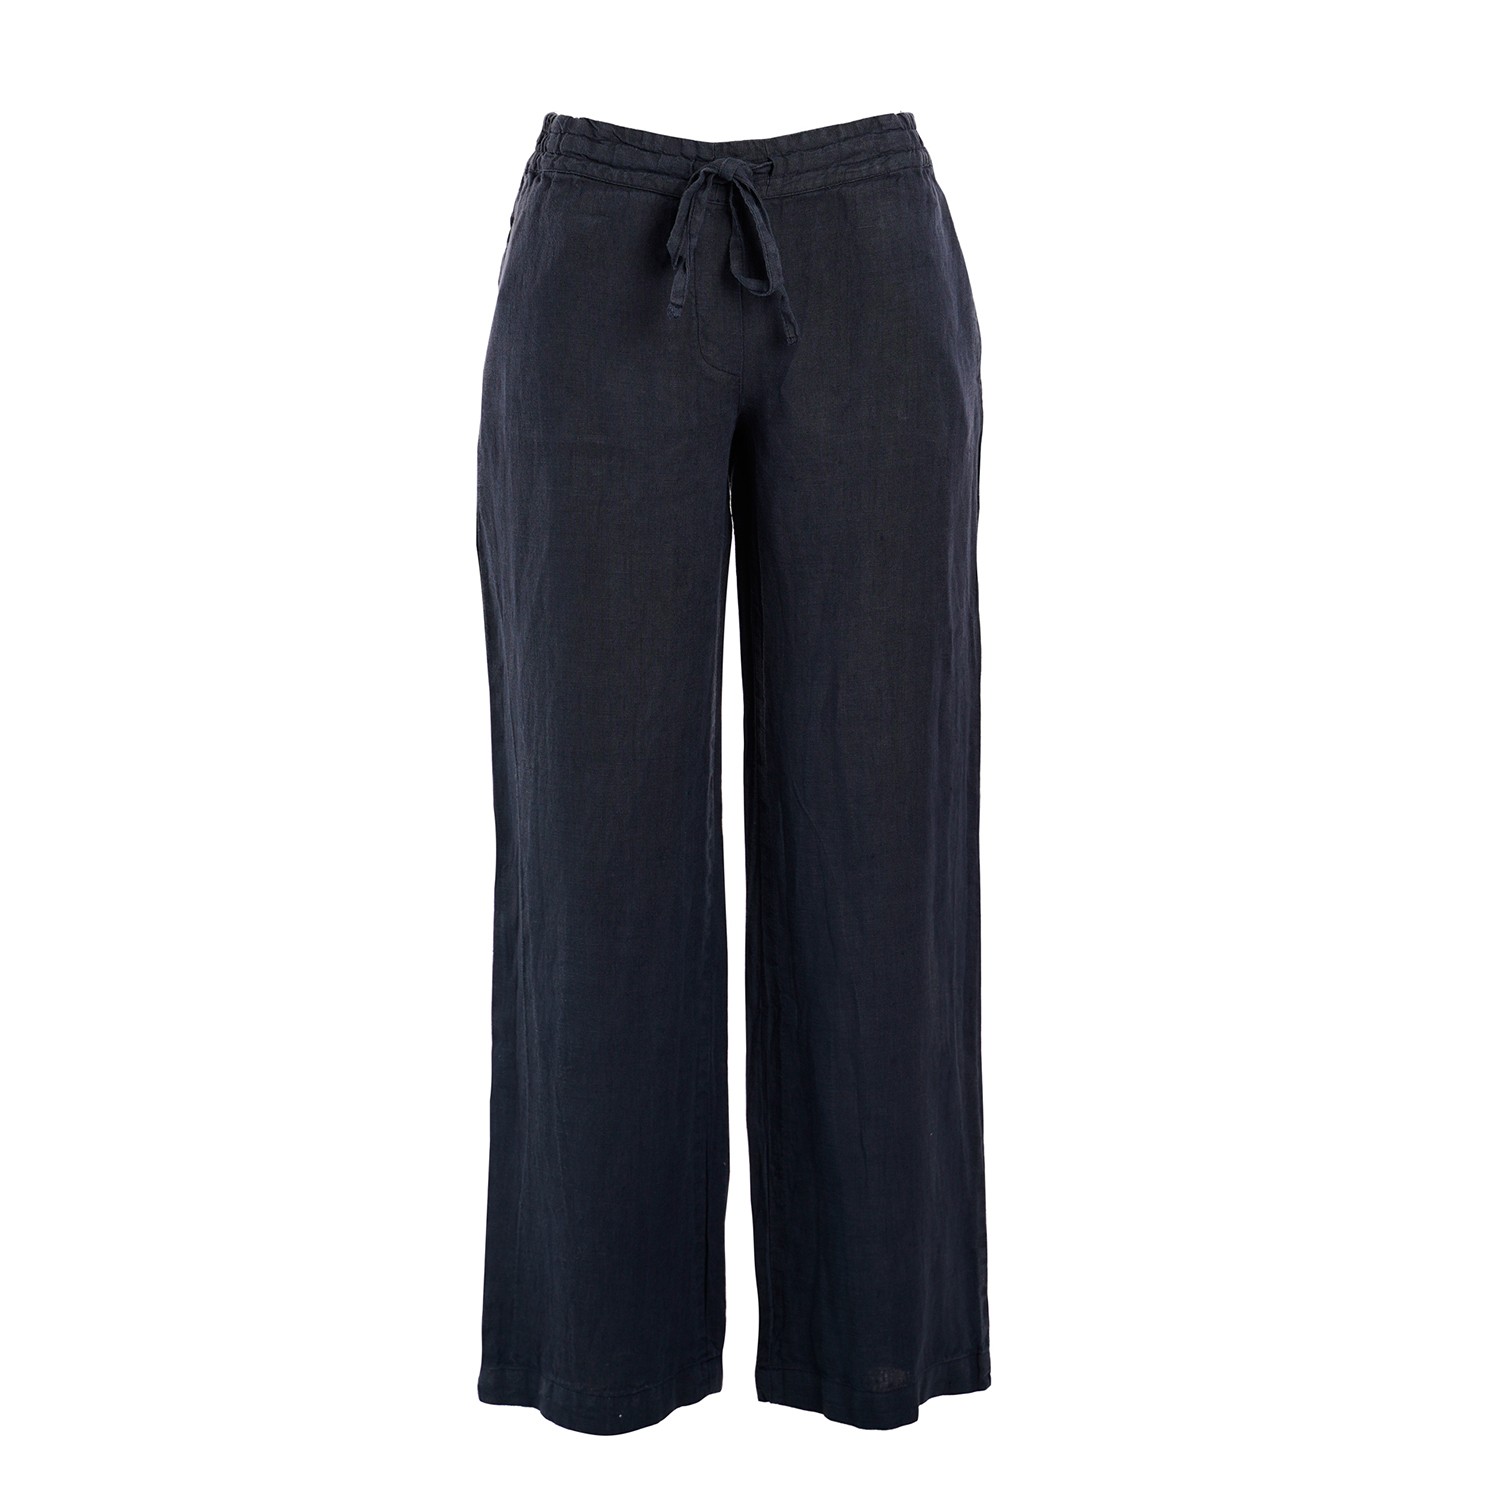 Haris Cotton Women's Solid Wide Legged Linen Pants - Blue Marine